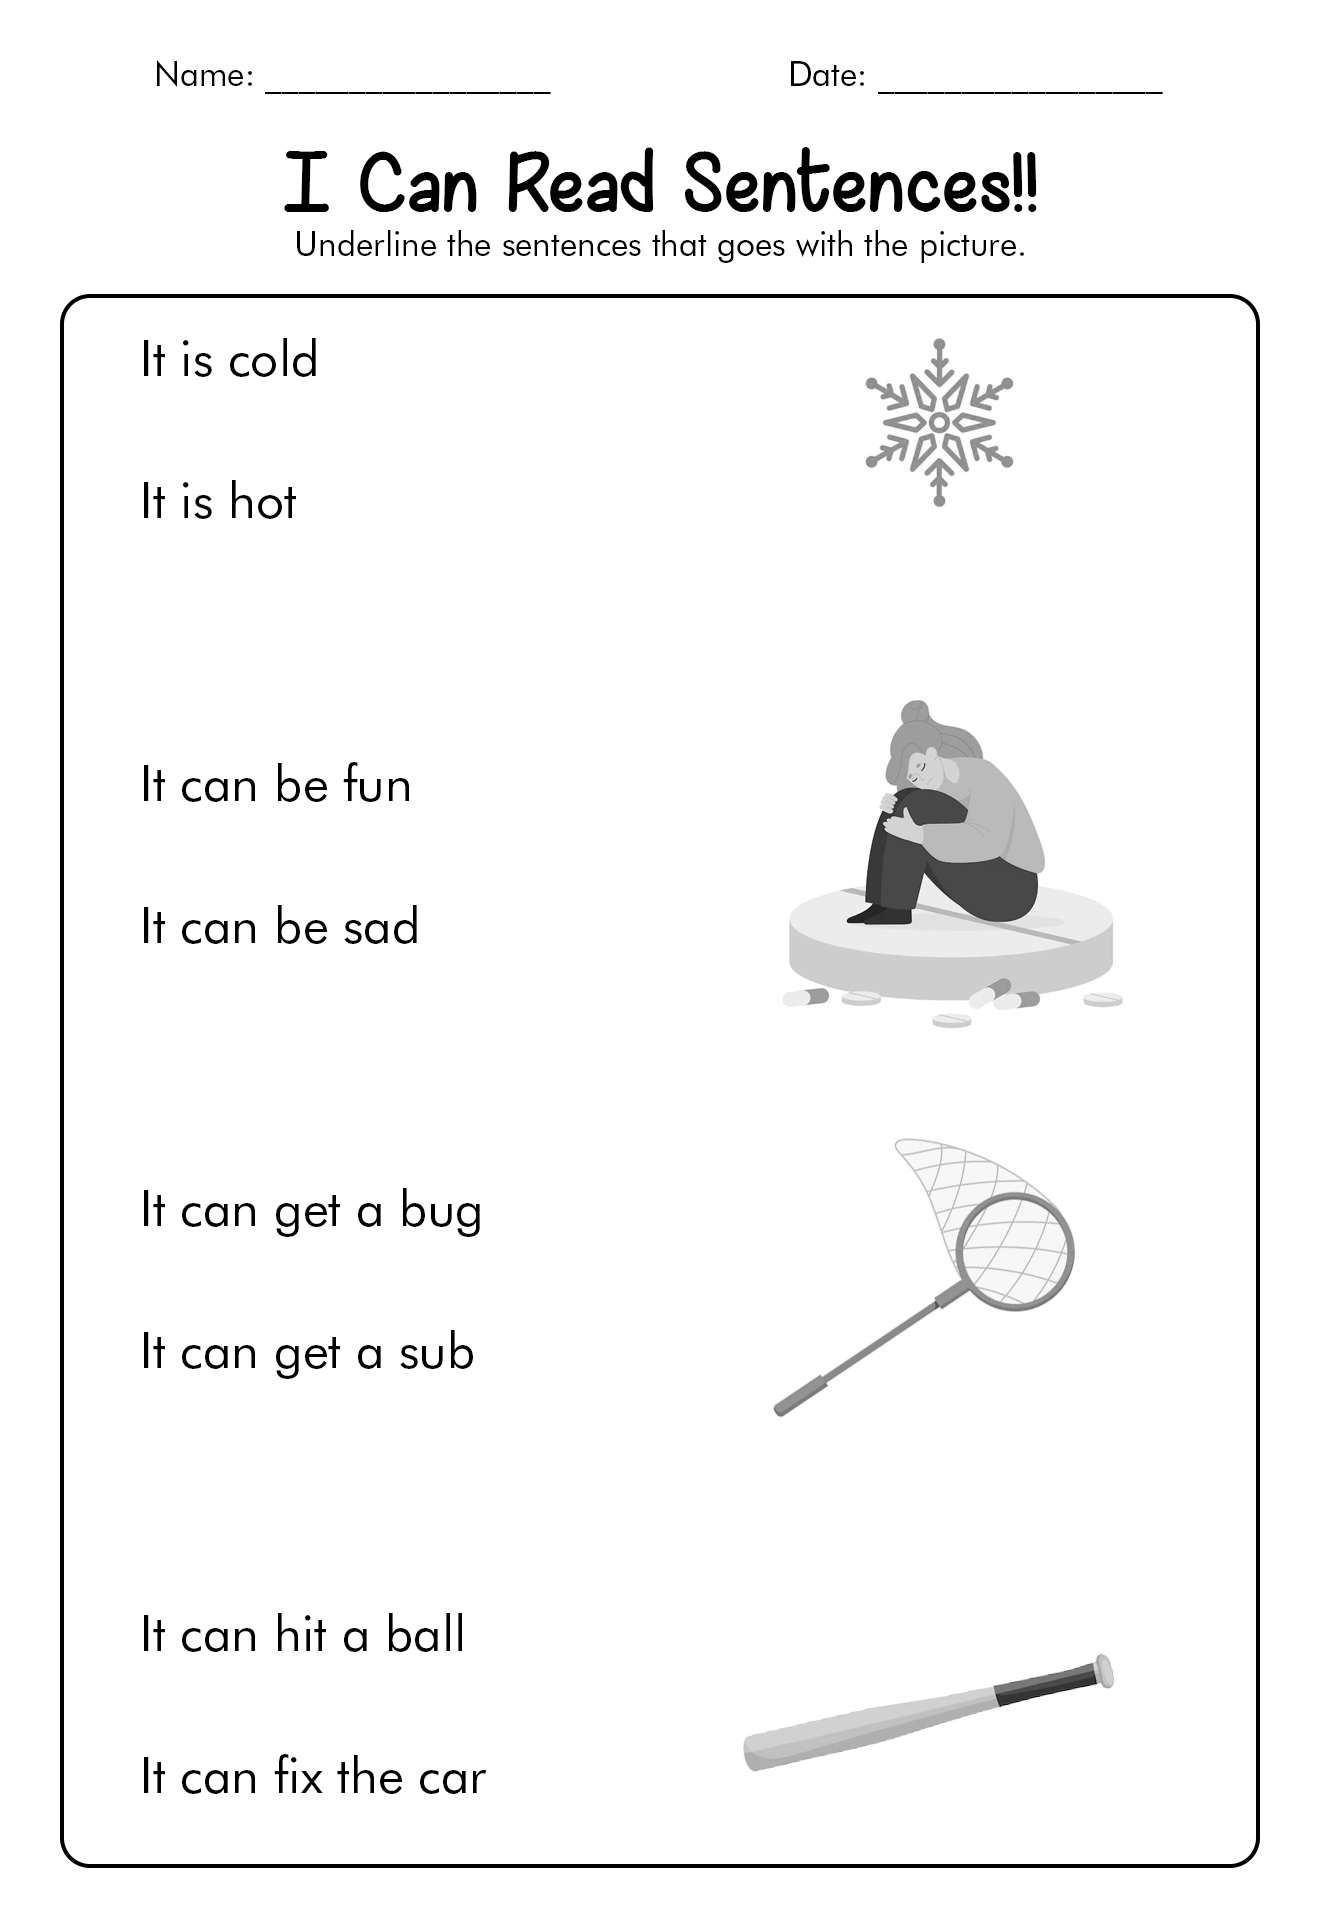 Reading Simple Sentence Kindergarten Image